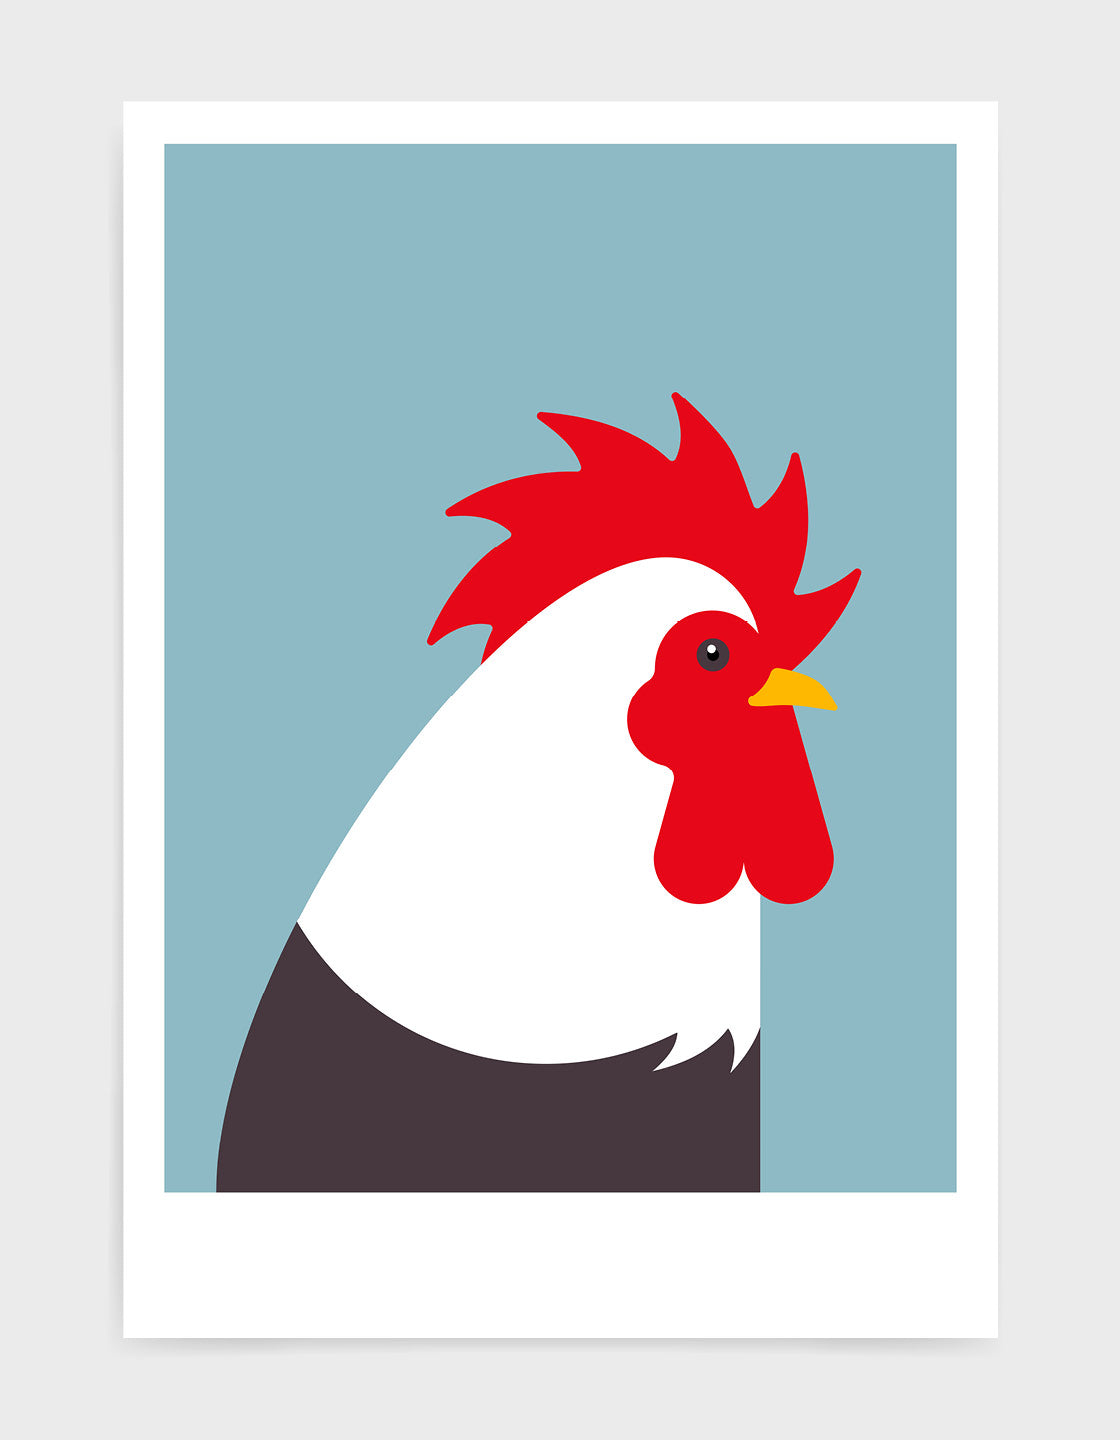 Modern cockerel / chicken illustration against a light blue background